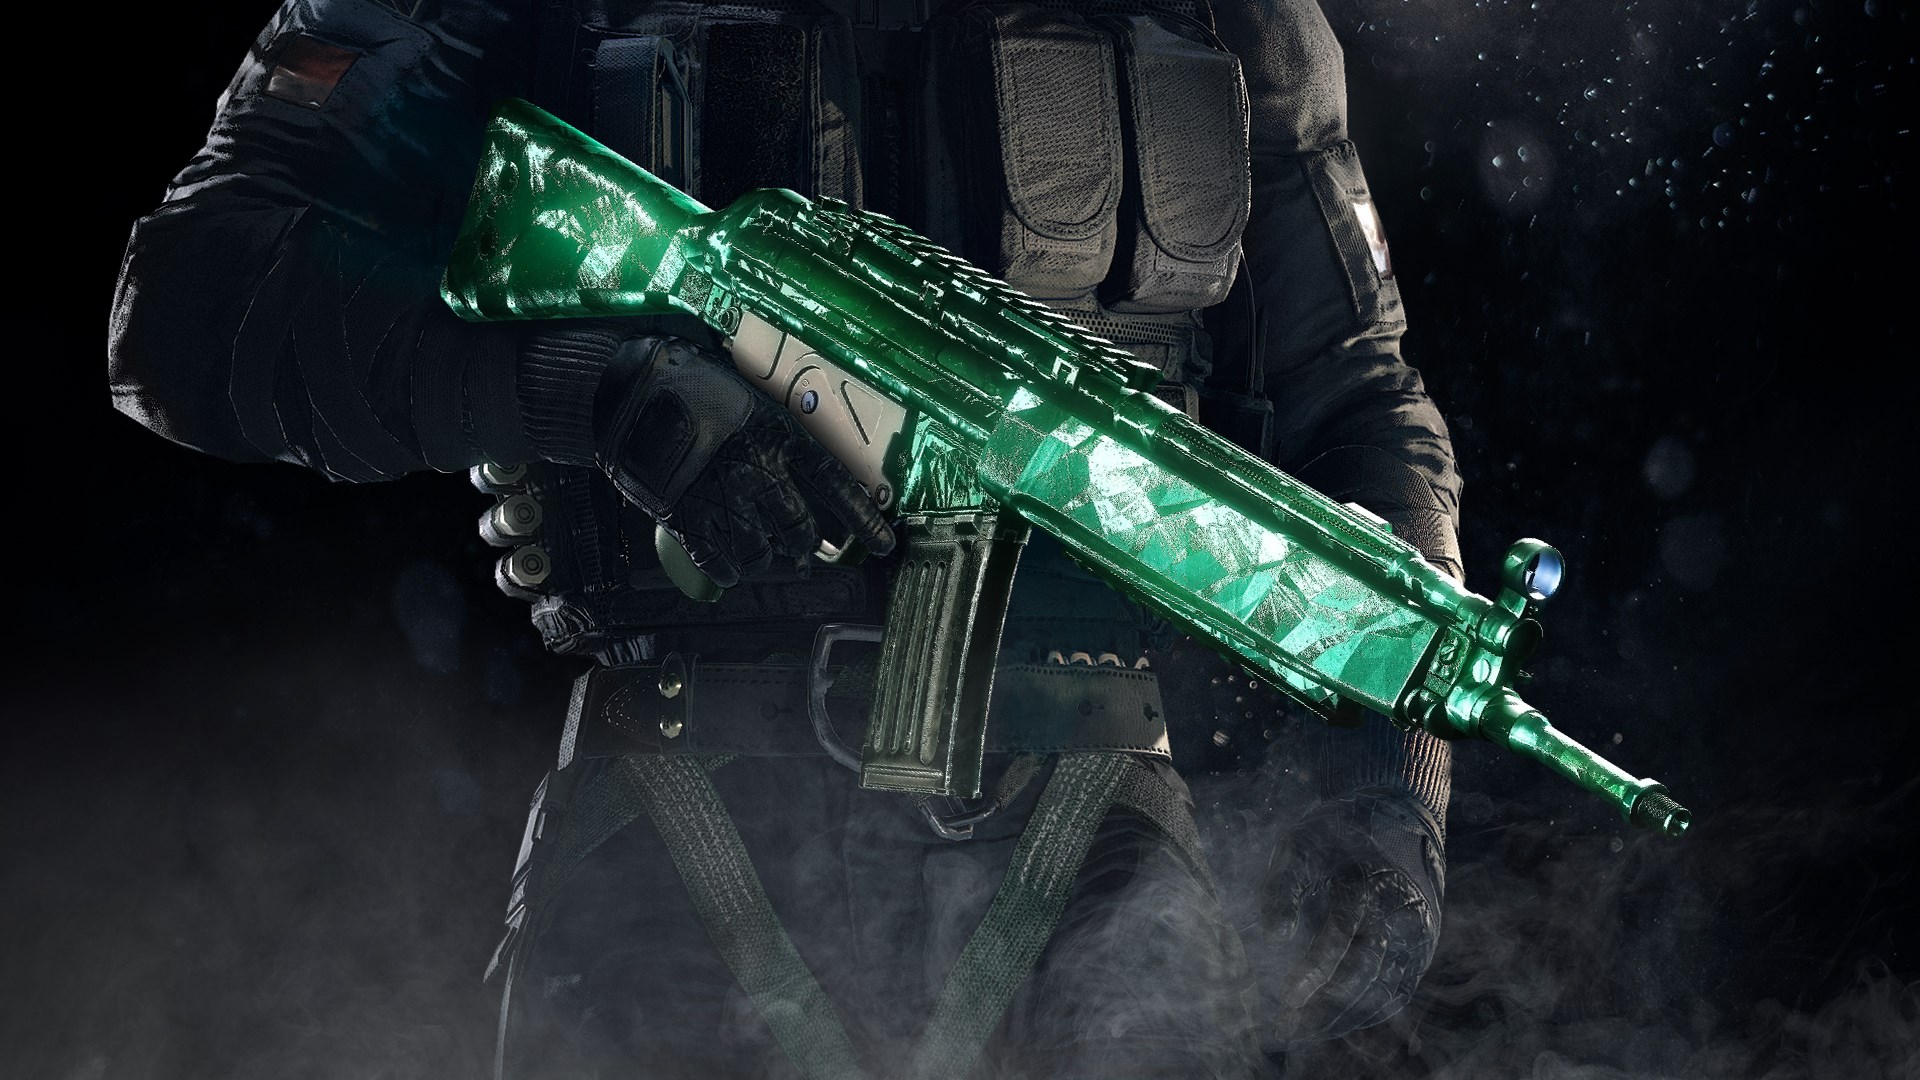 hjerne Shipley Erobrer Buy Emerald Weapon Skin - Microsoft Store en-GR